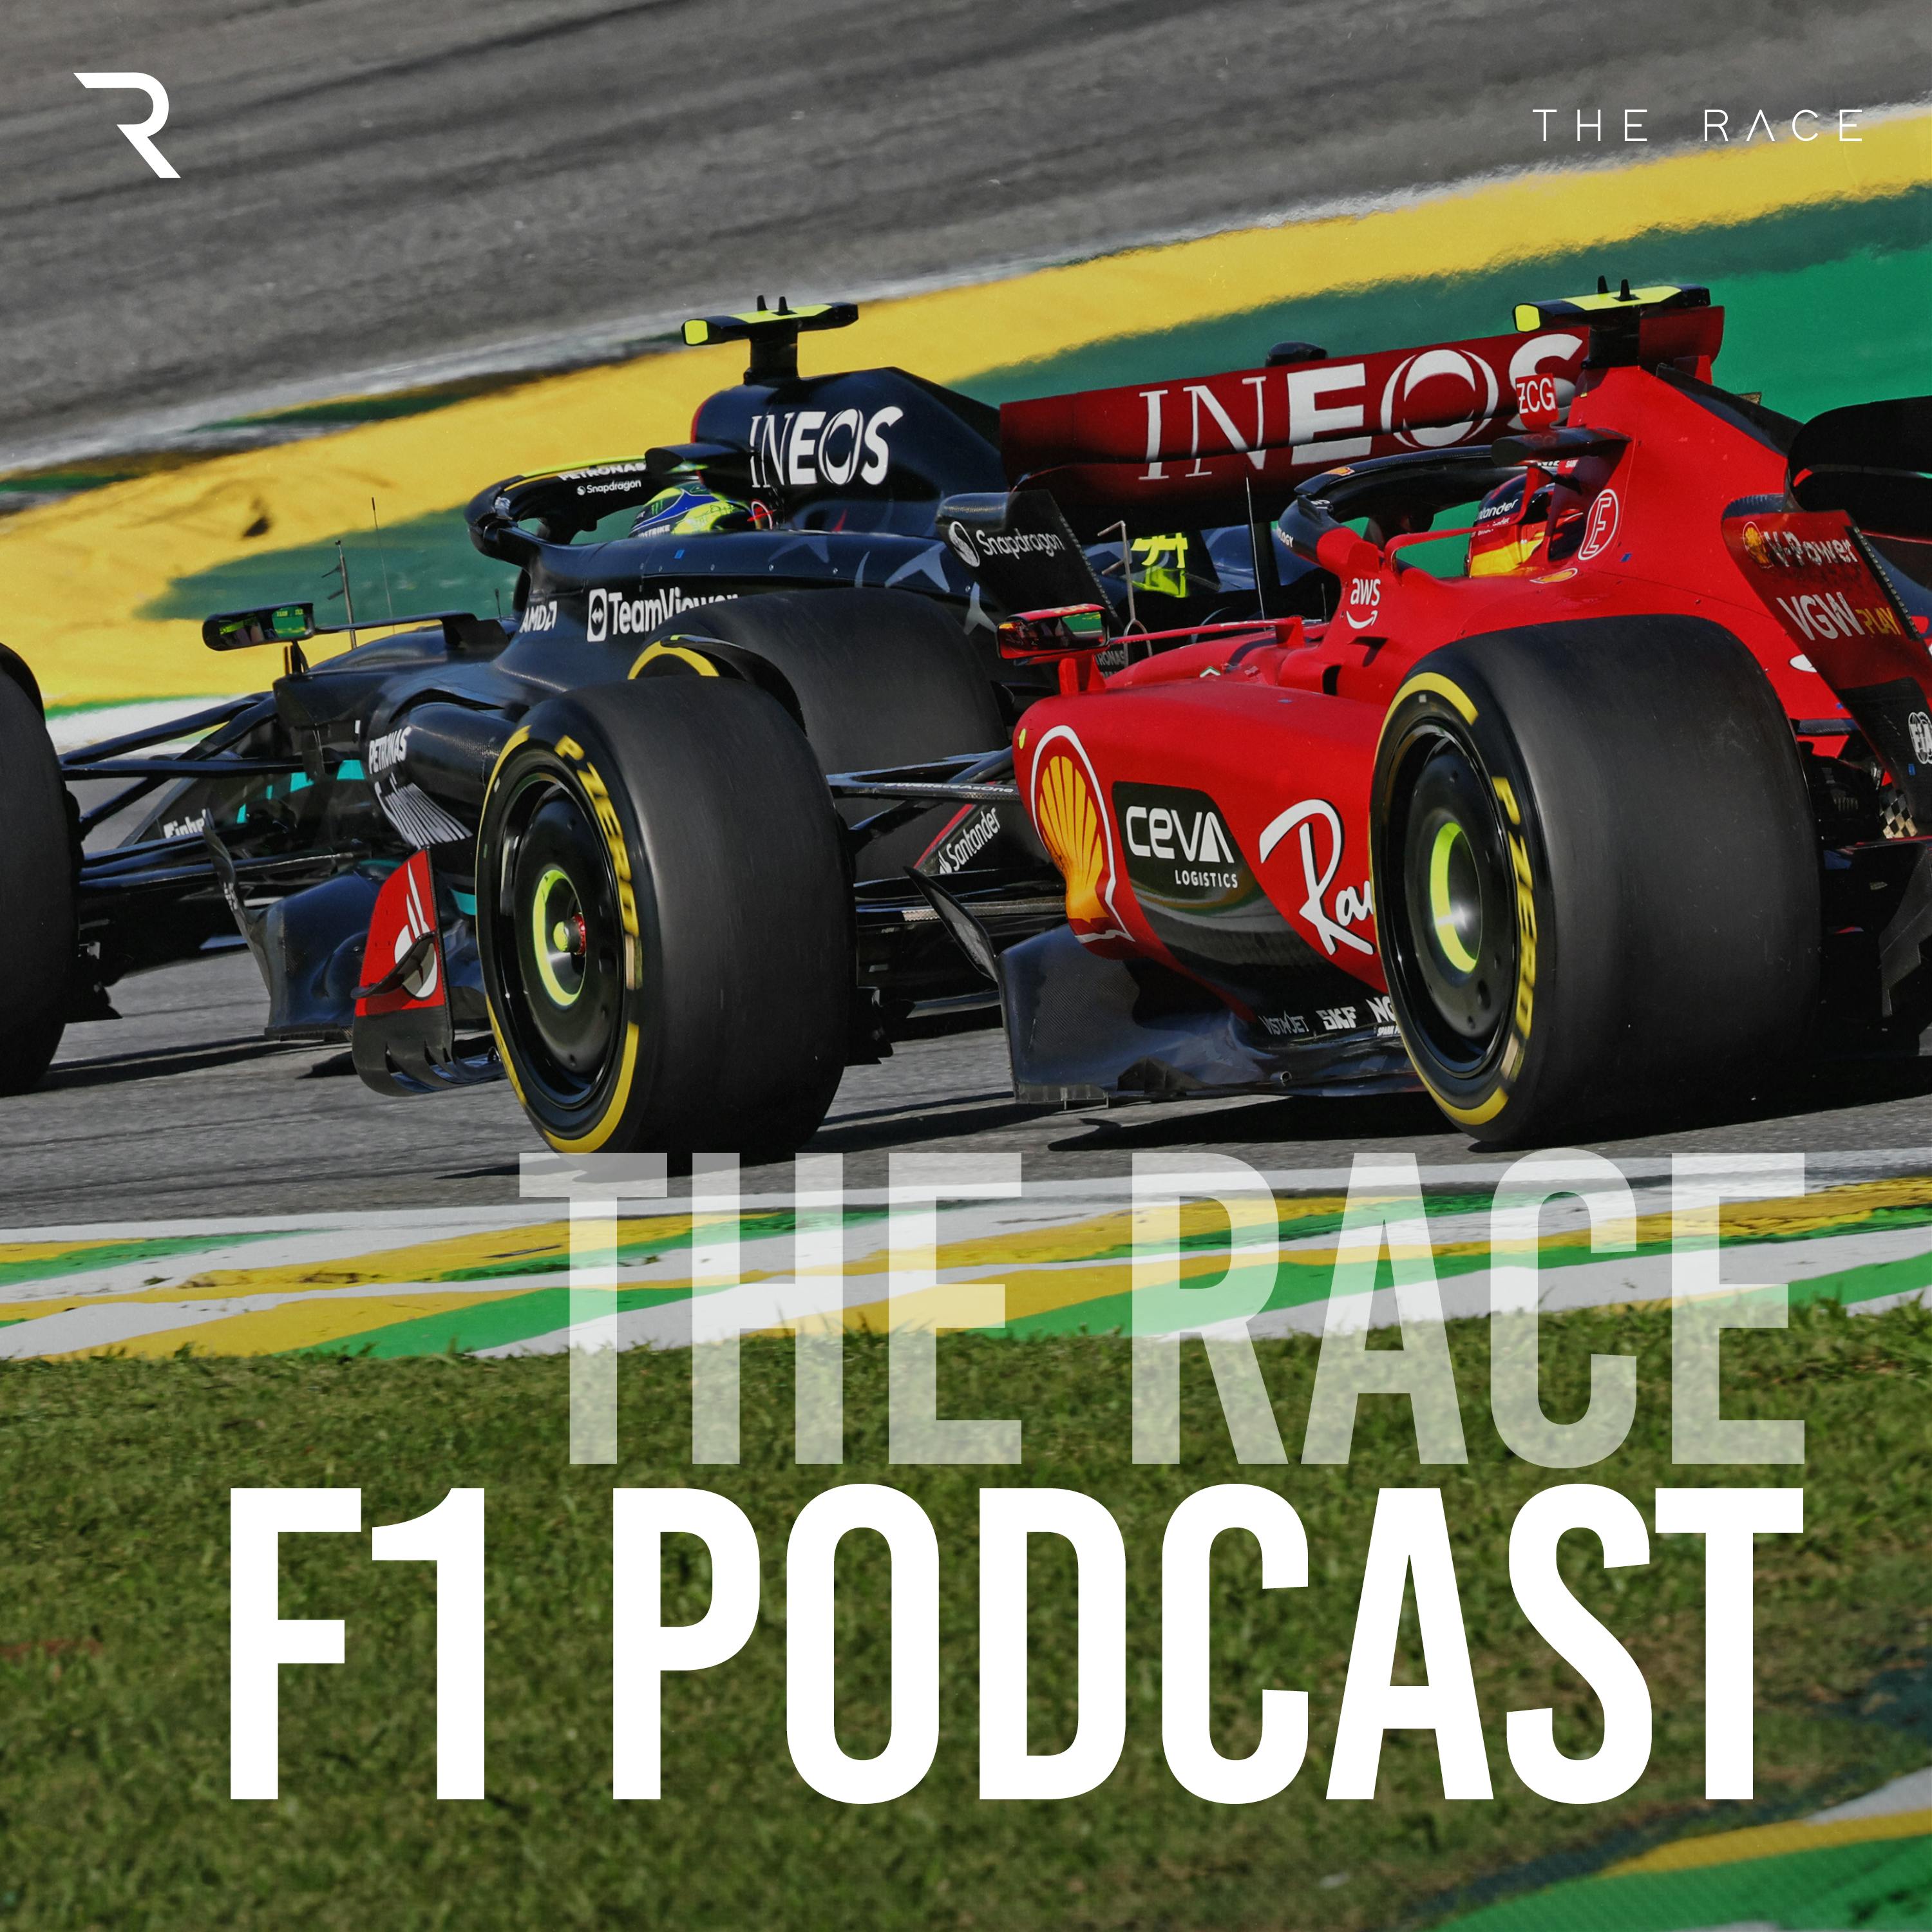 Why the Mercedes-Ferrari battle for P2 matters + Should F1 ditch Monaco?